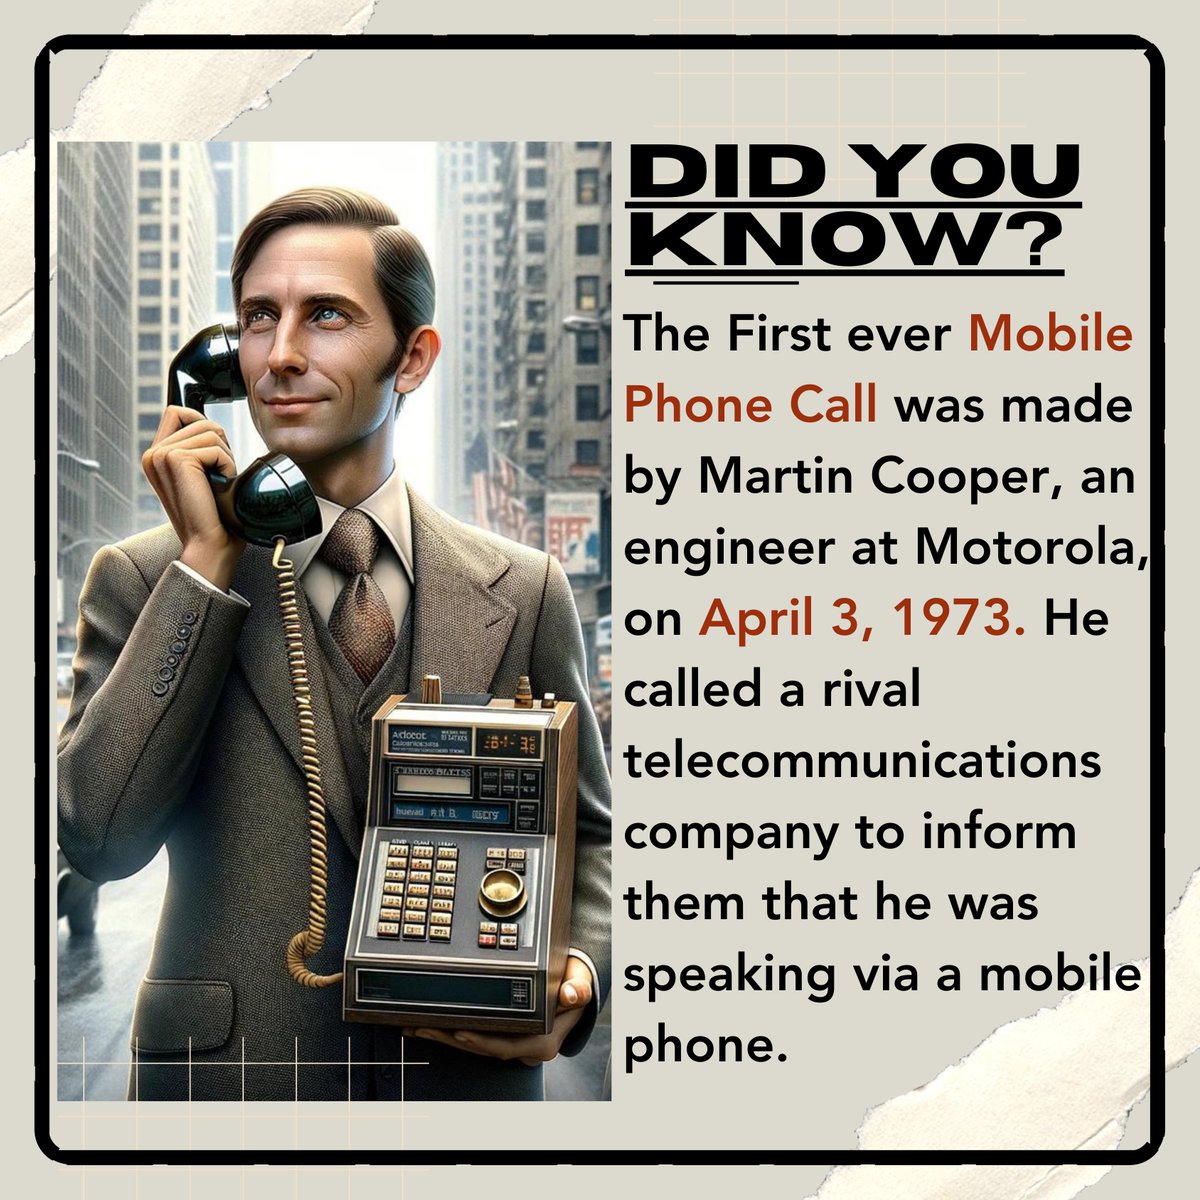 What a legend!
#MobileTechnology #TechHistory
#tuesdayvibe  #DigitalMarketing #kasper